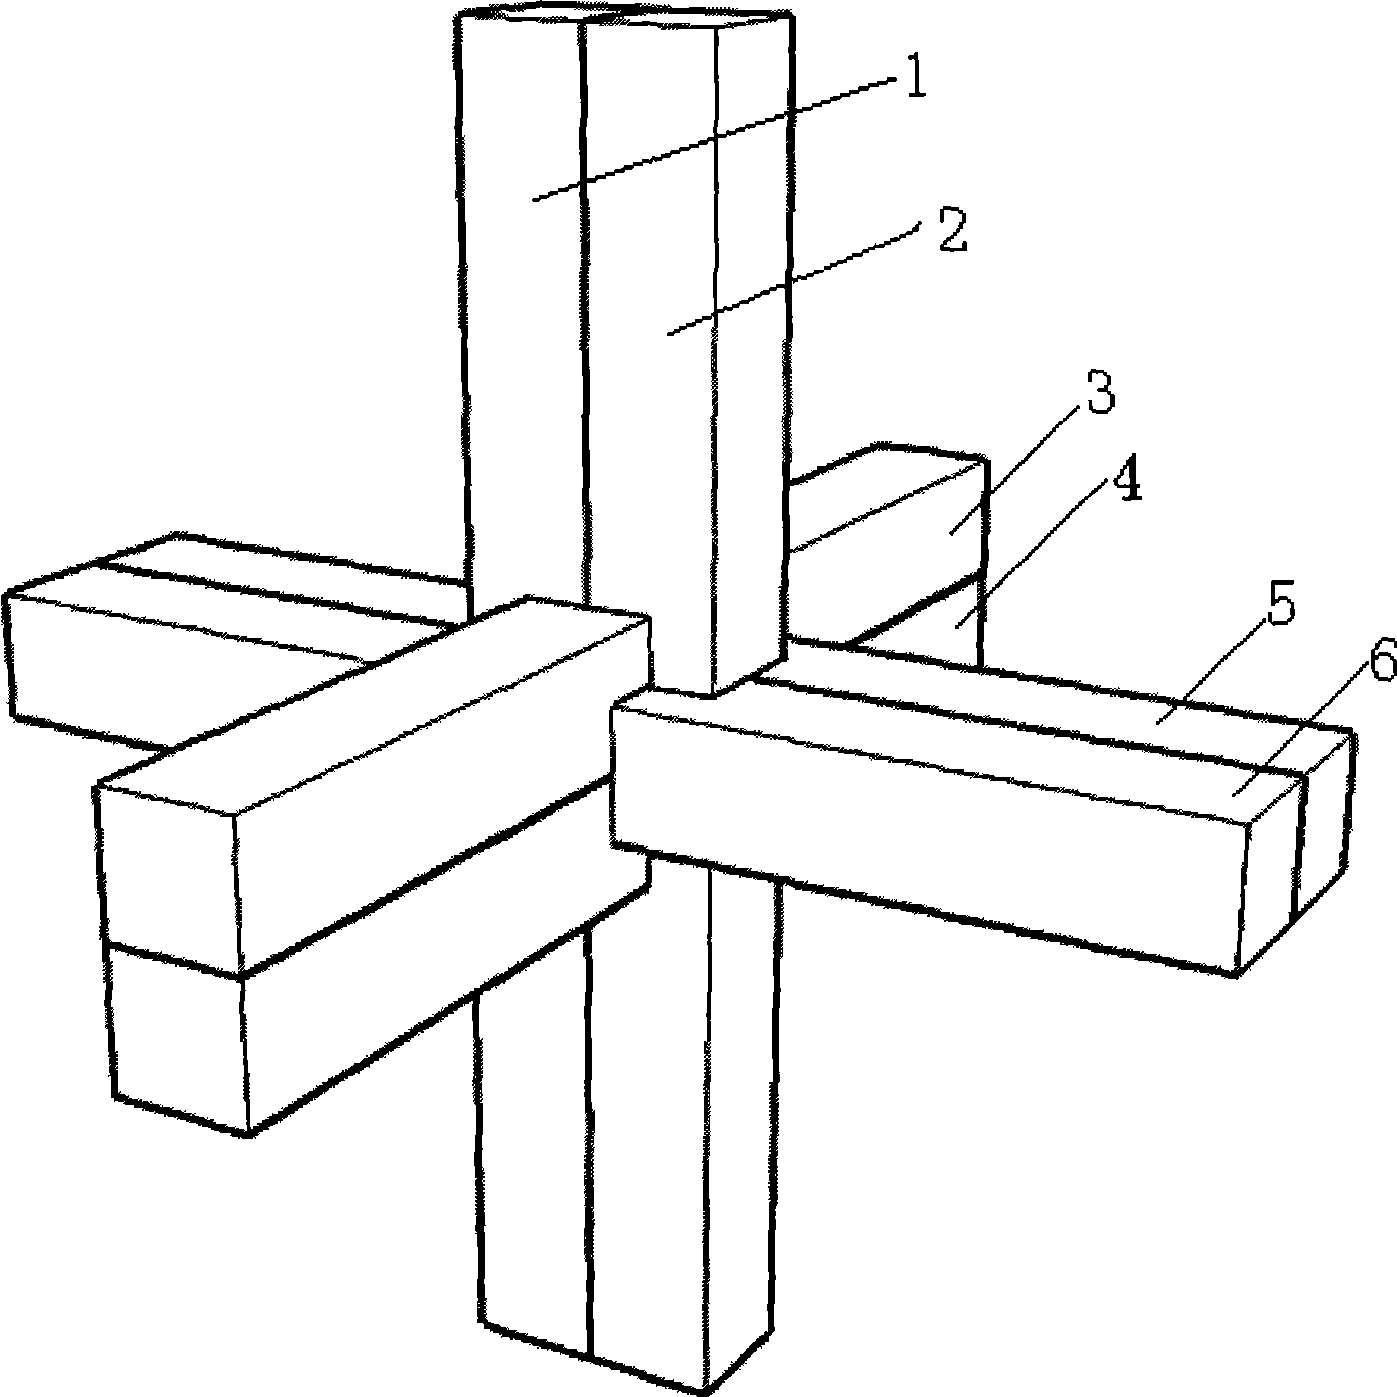 Demountable three-dimensional beam-and-column construction method